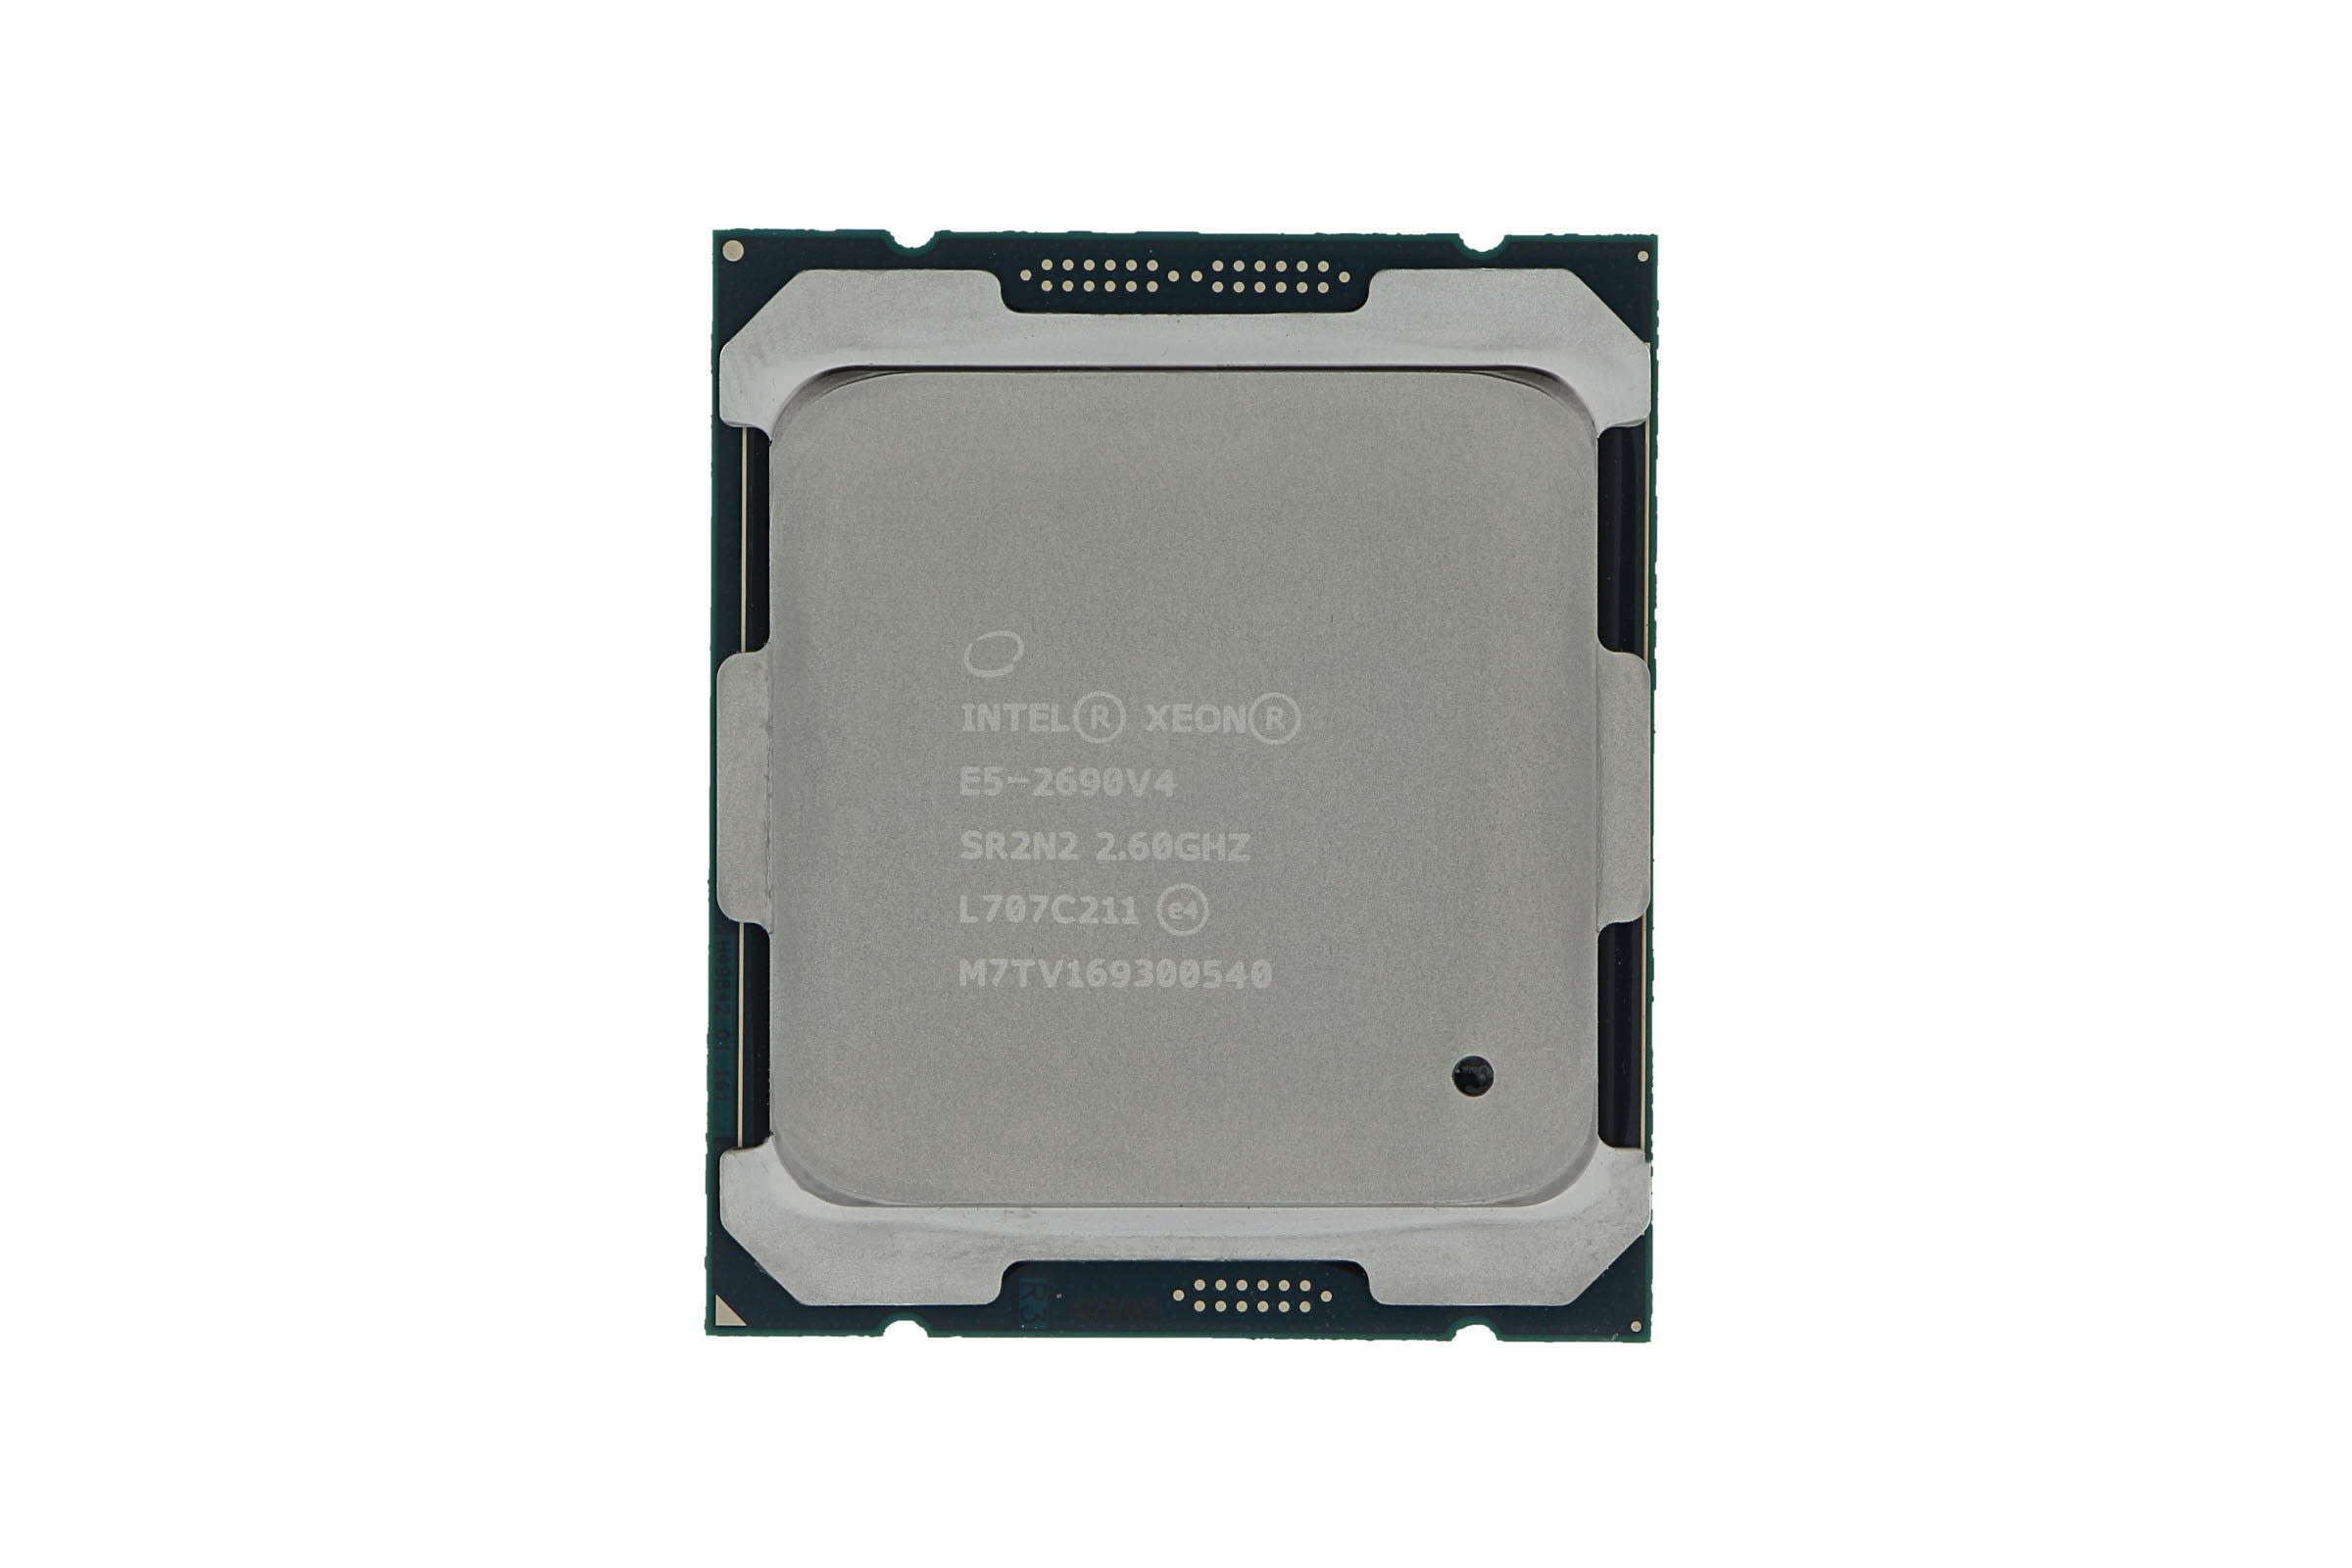 Intel Xeon E5-2690 v4 CPU 2.60GHz 14-Core – Buy Online